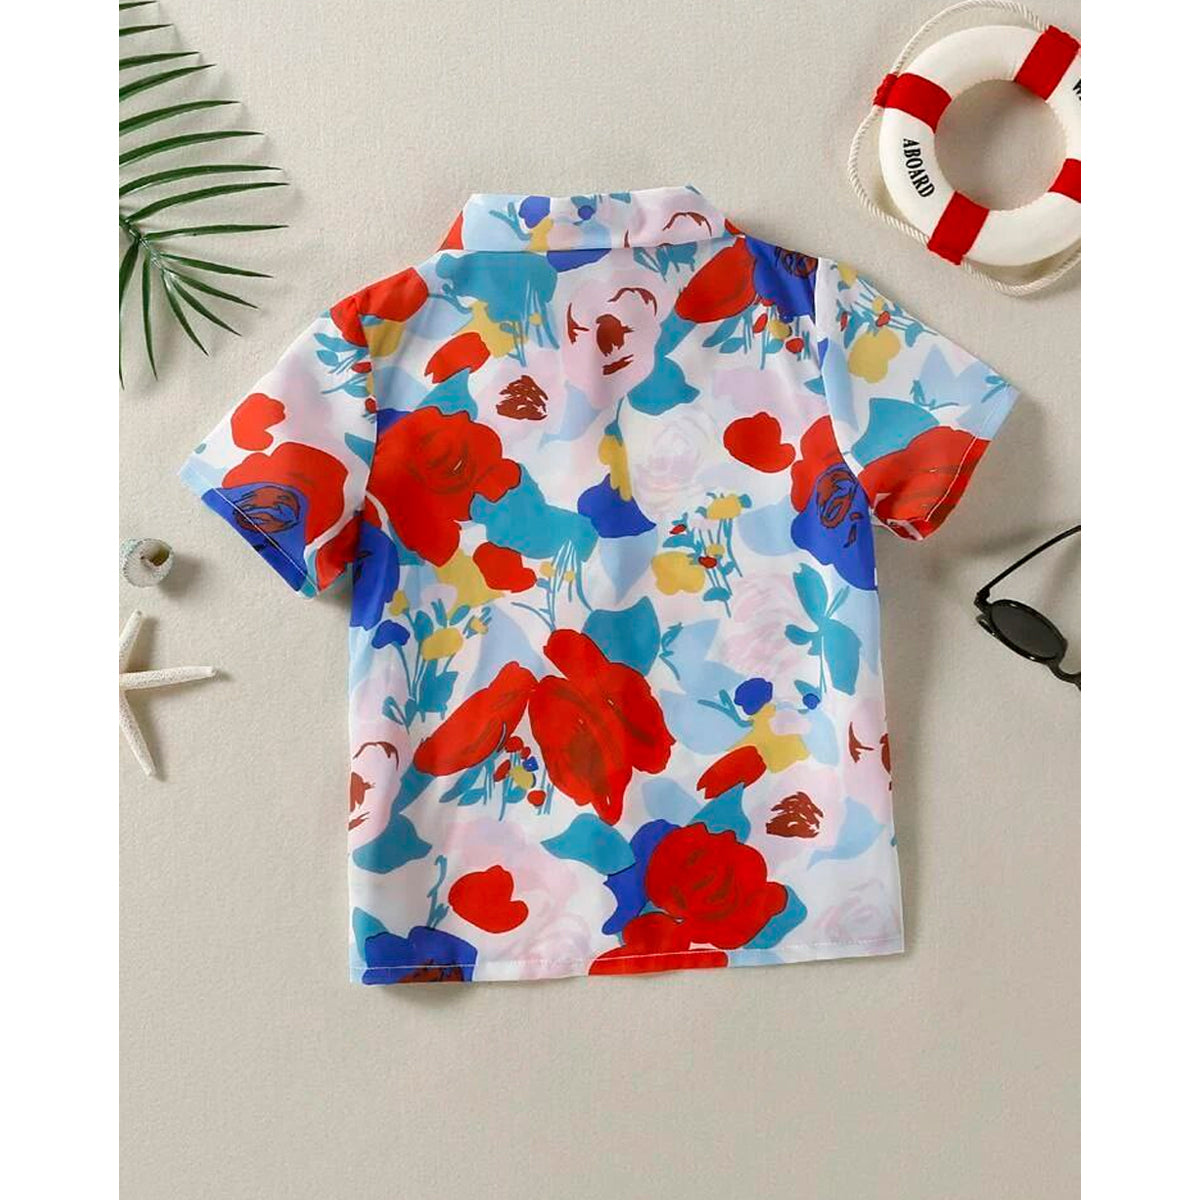 Venutaloza Stylish Colourful Graphic Designer ((Combo pack For 6)) Shirt For Boys.